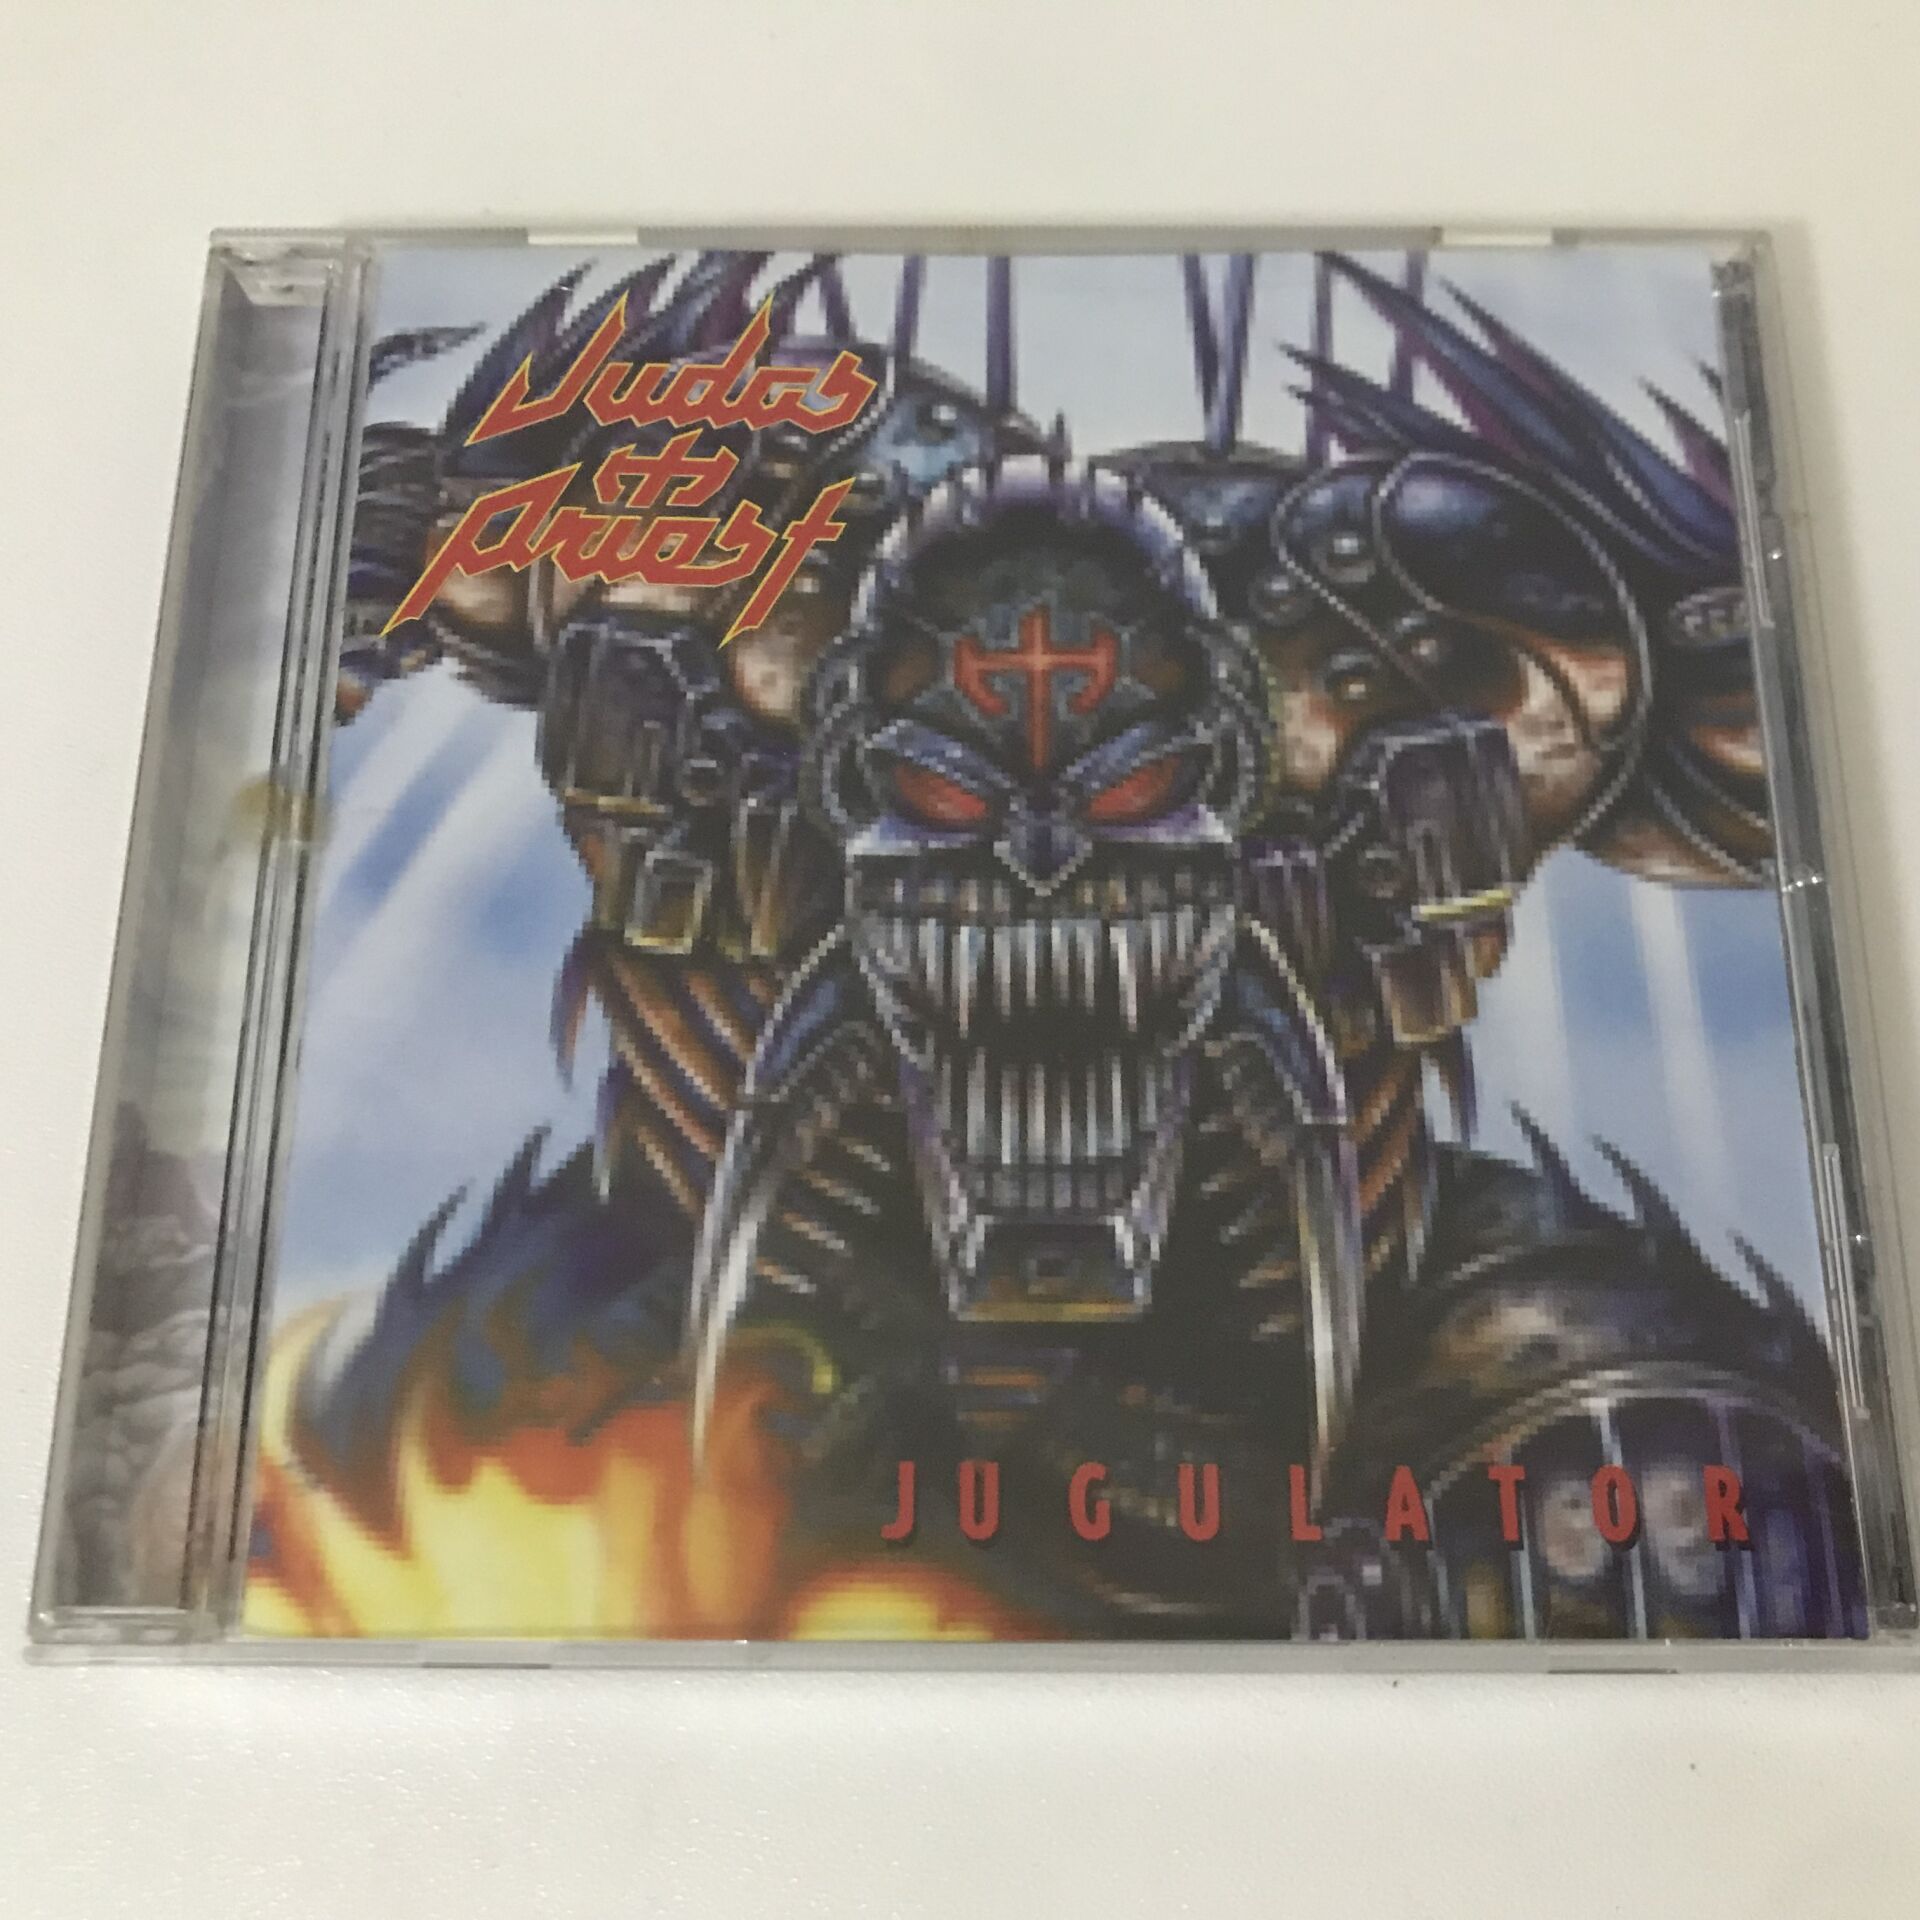 Judas Priest – Jugulator